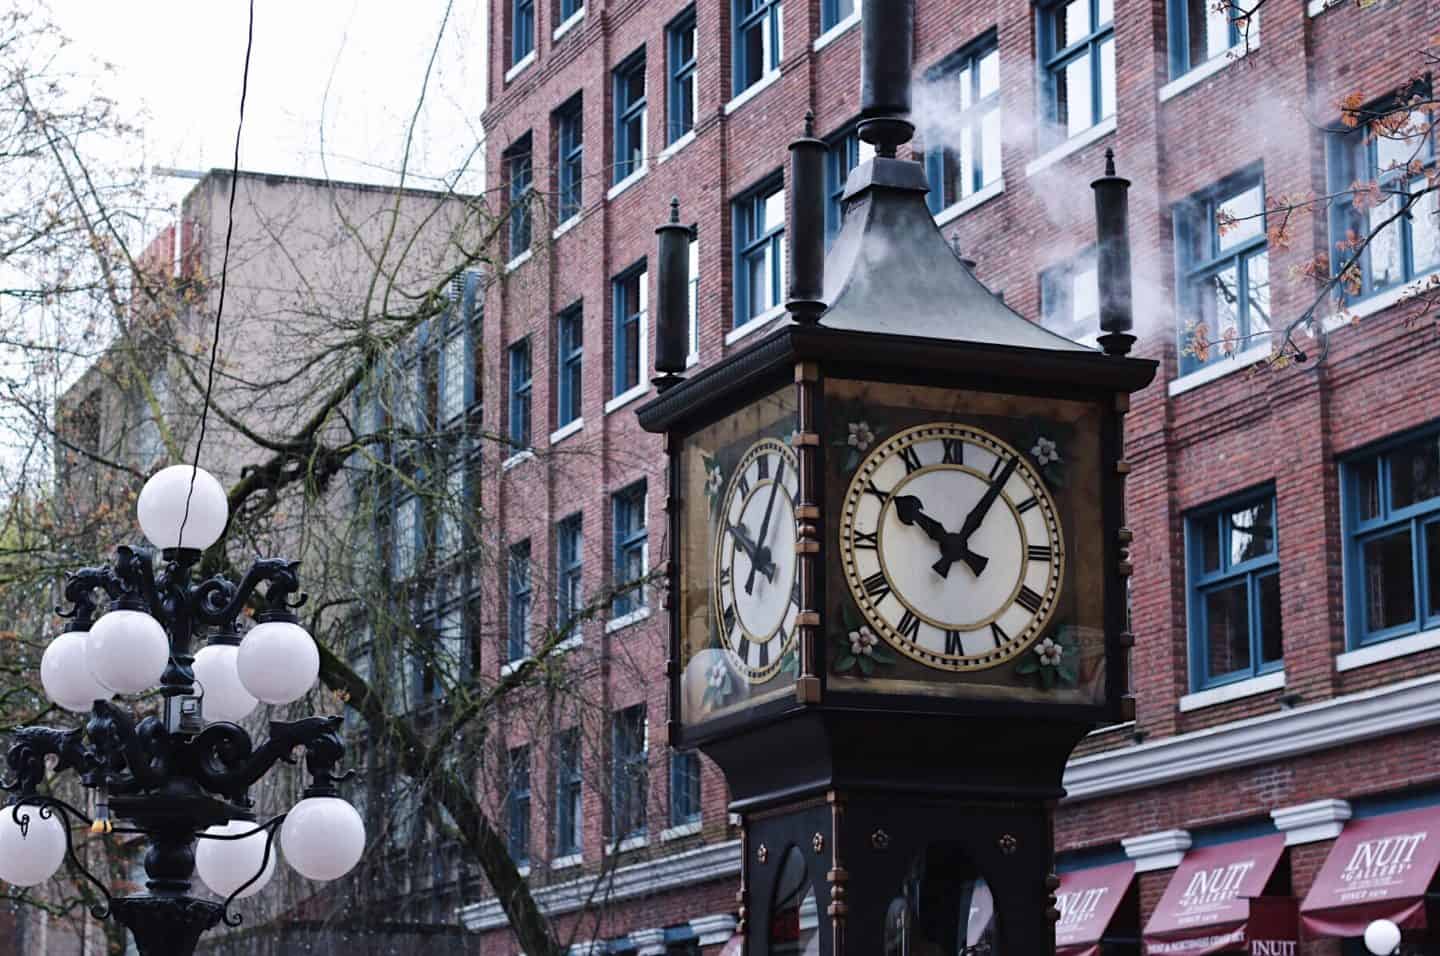 Gastown Steam Clock, Vancouver, British Columbia